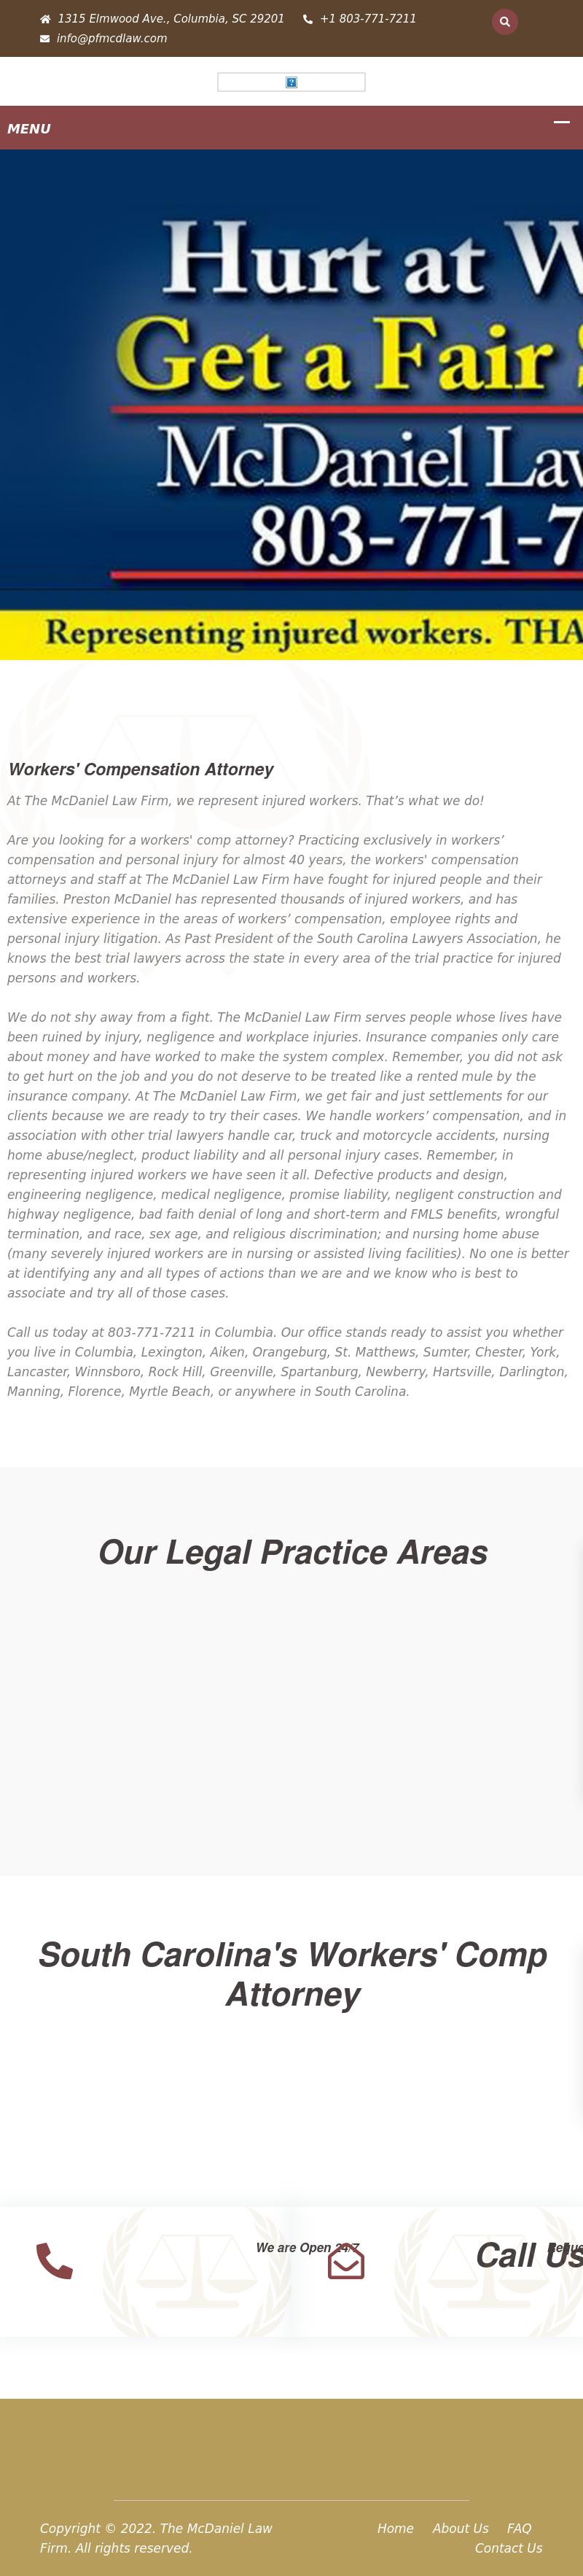 McDaniel, Preston F - Columbia SC Lawyers